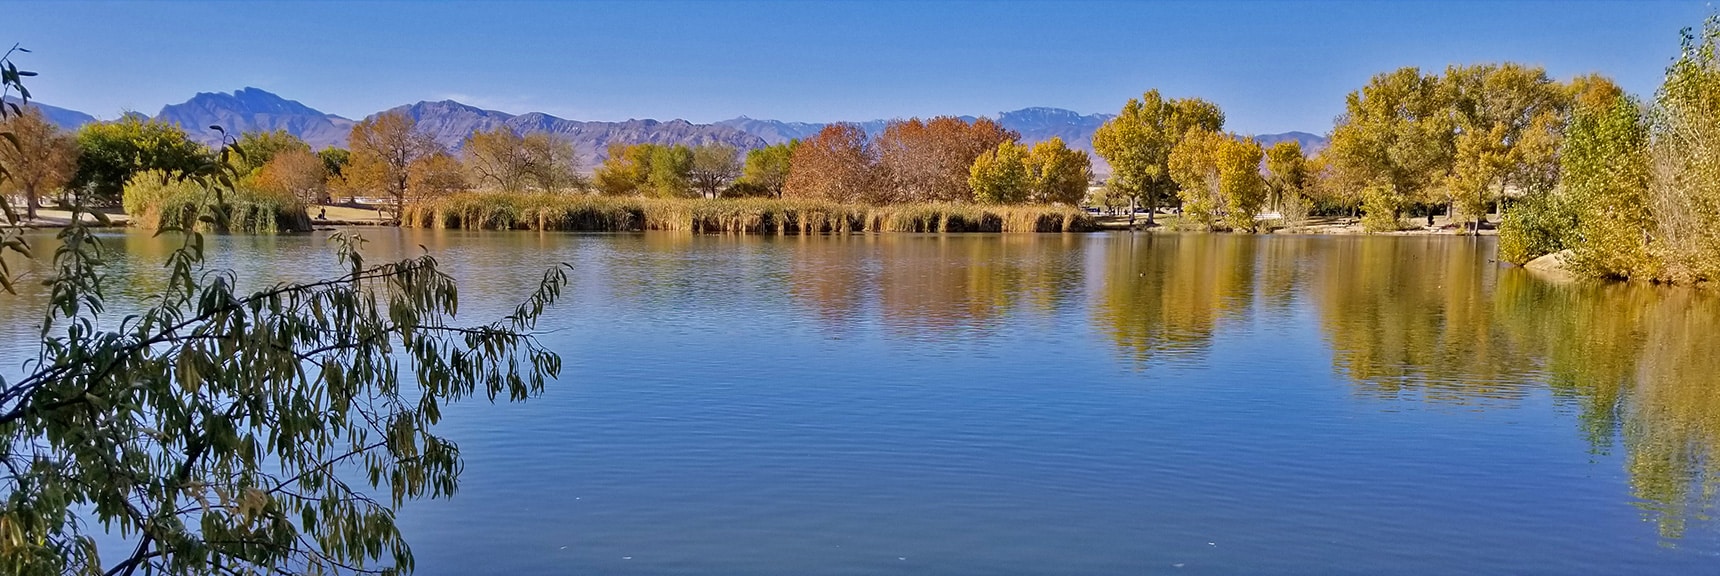 Tule Lake at Floyd Lamb Park, Location for Fishing | Centennial Hills Mountain Bike Conditioning Adventure Loop, Las Vegas, Nevada